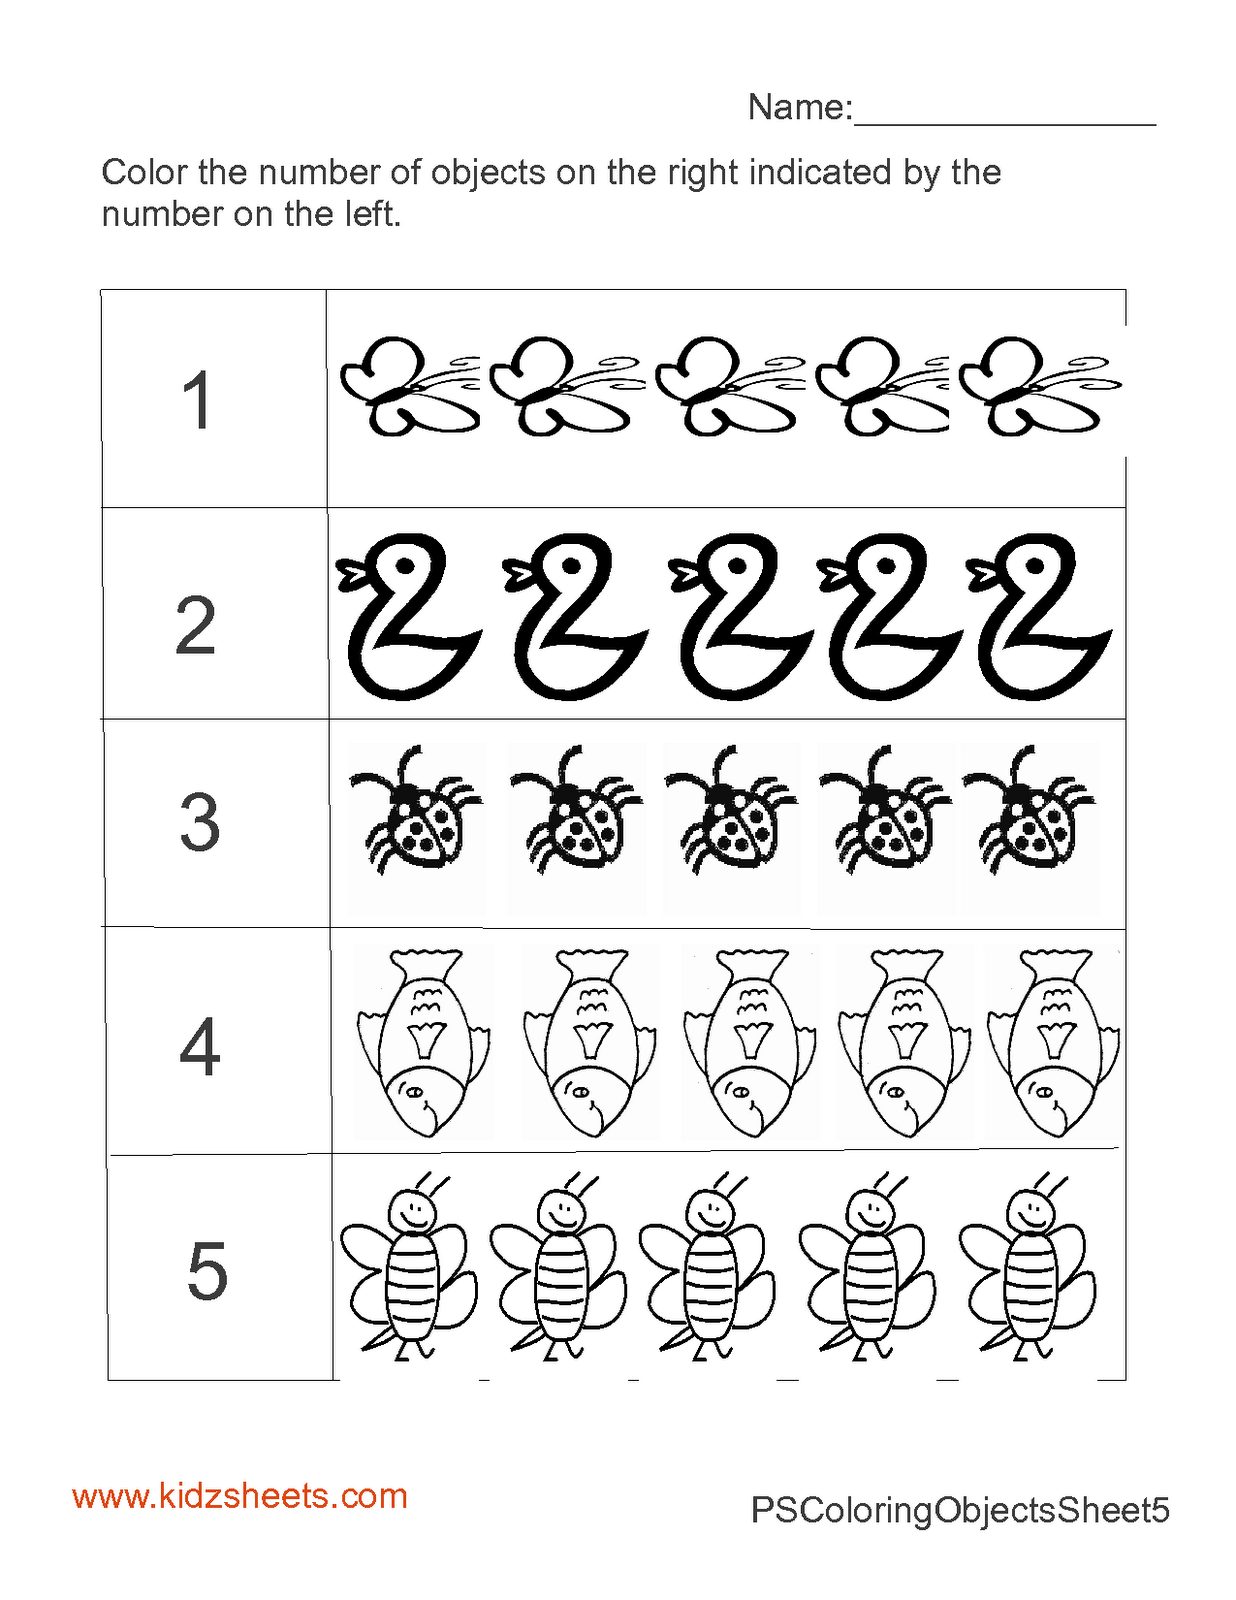 kidz-worksheets-preschool-count-color-worksheet5